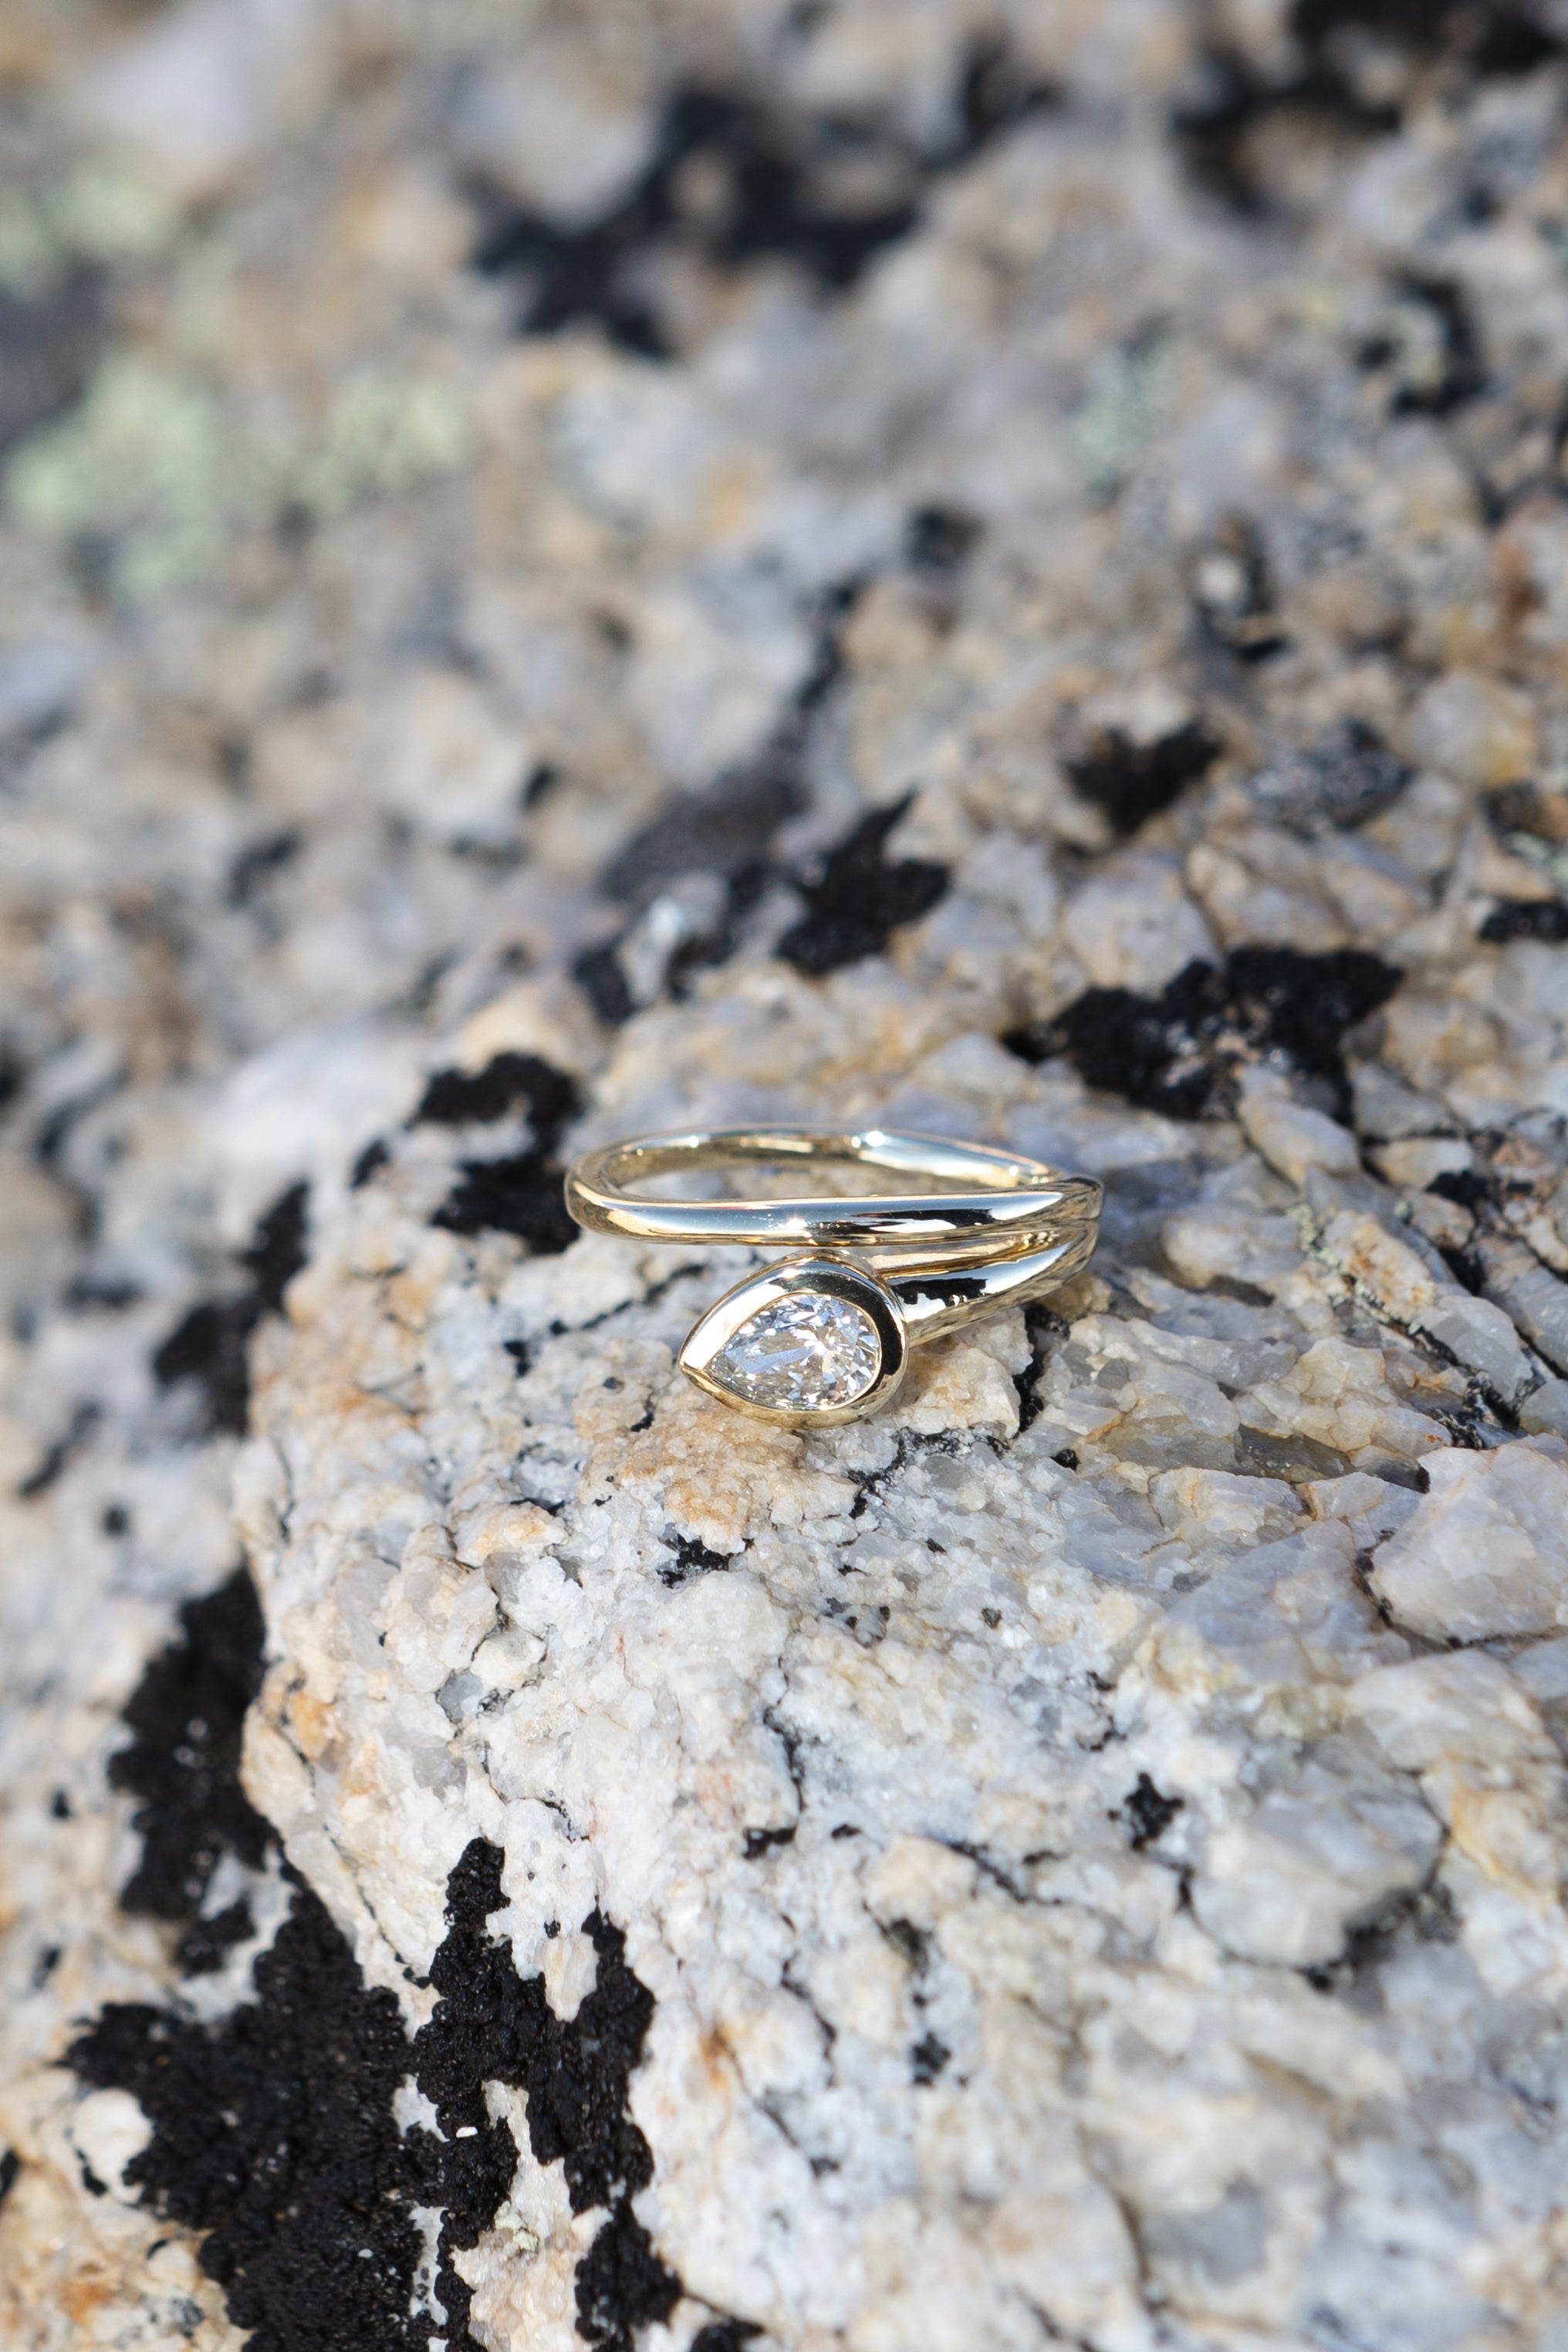 Yellow Gold Pear Diamond Half Spiral Ring .65cts